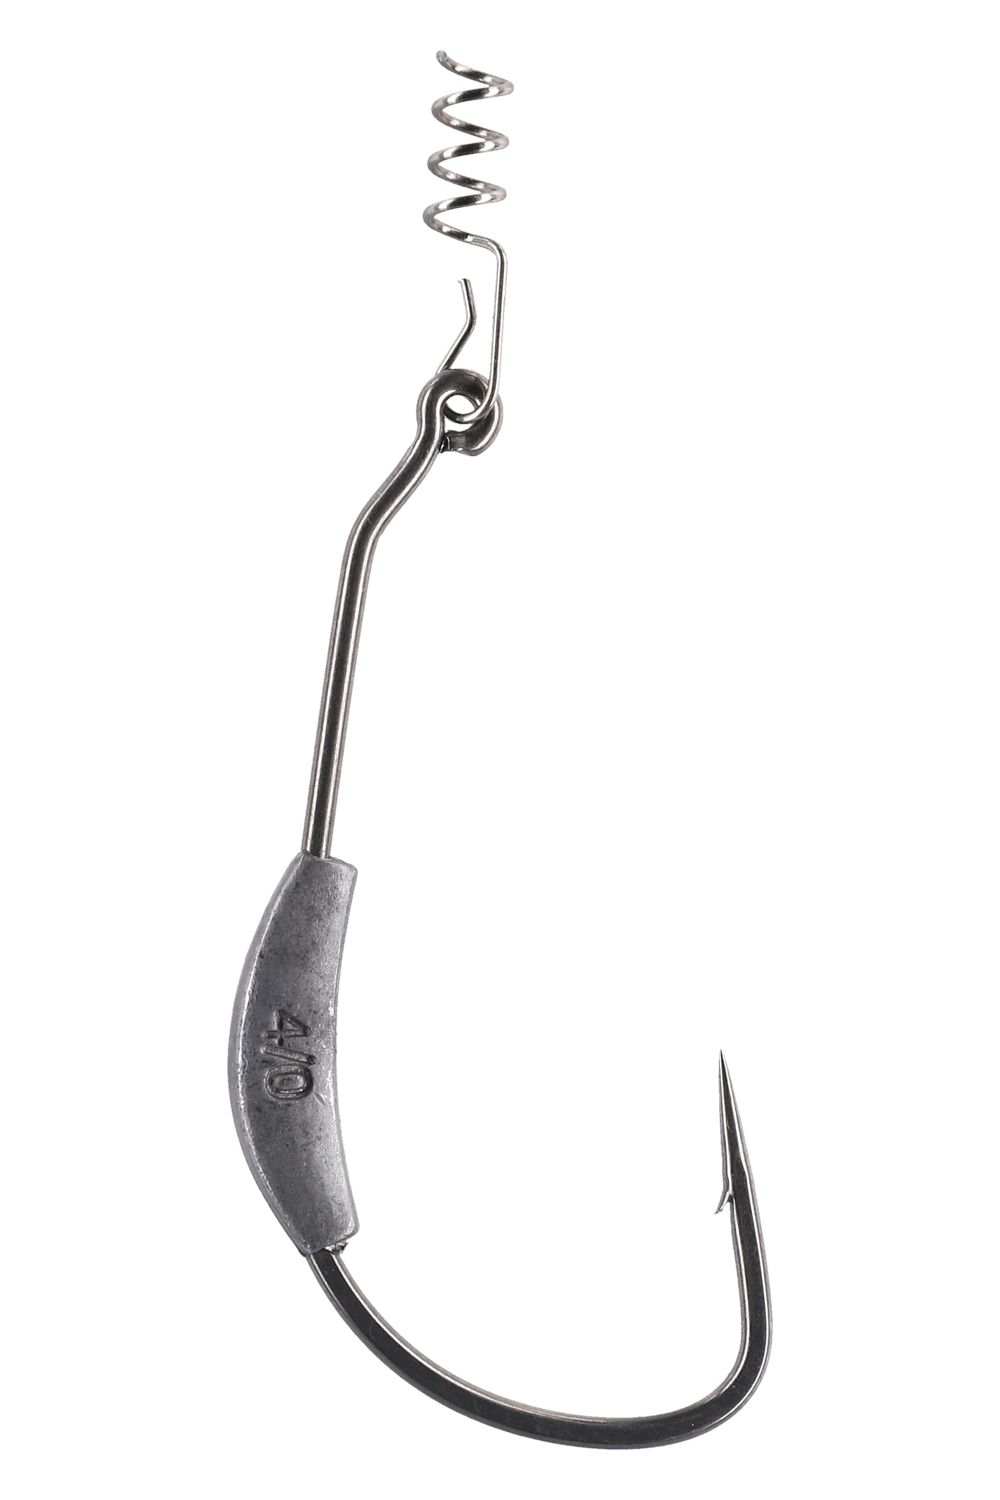 https://cdn.fishingmegastore.com/hires/mikado/offset-weedless-worm-hook-with-screw-weighted.jpg